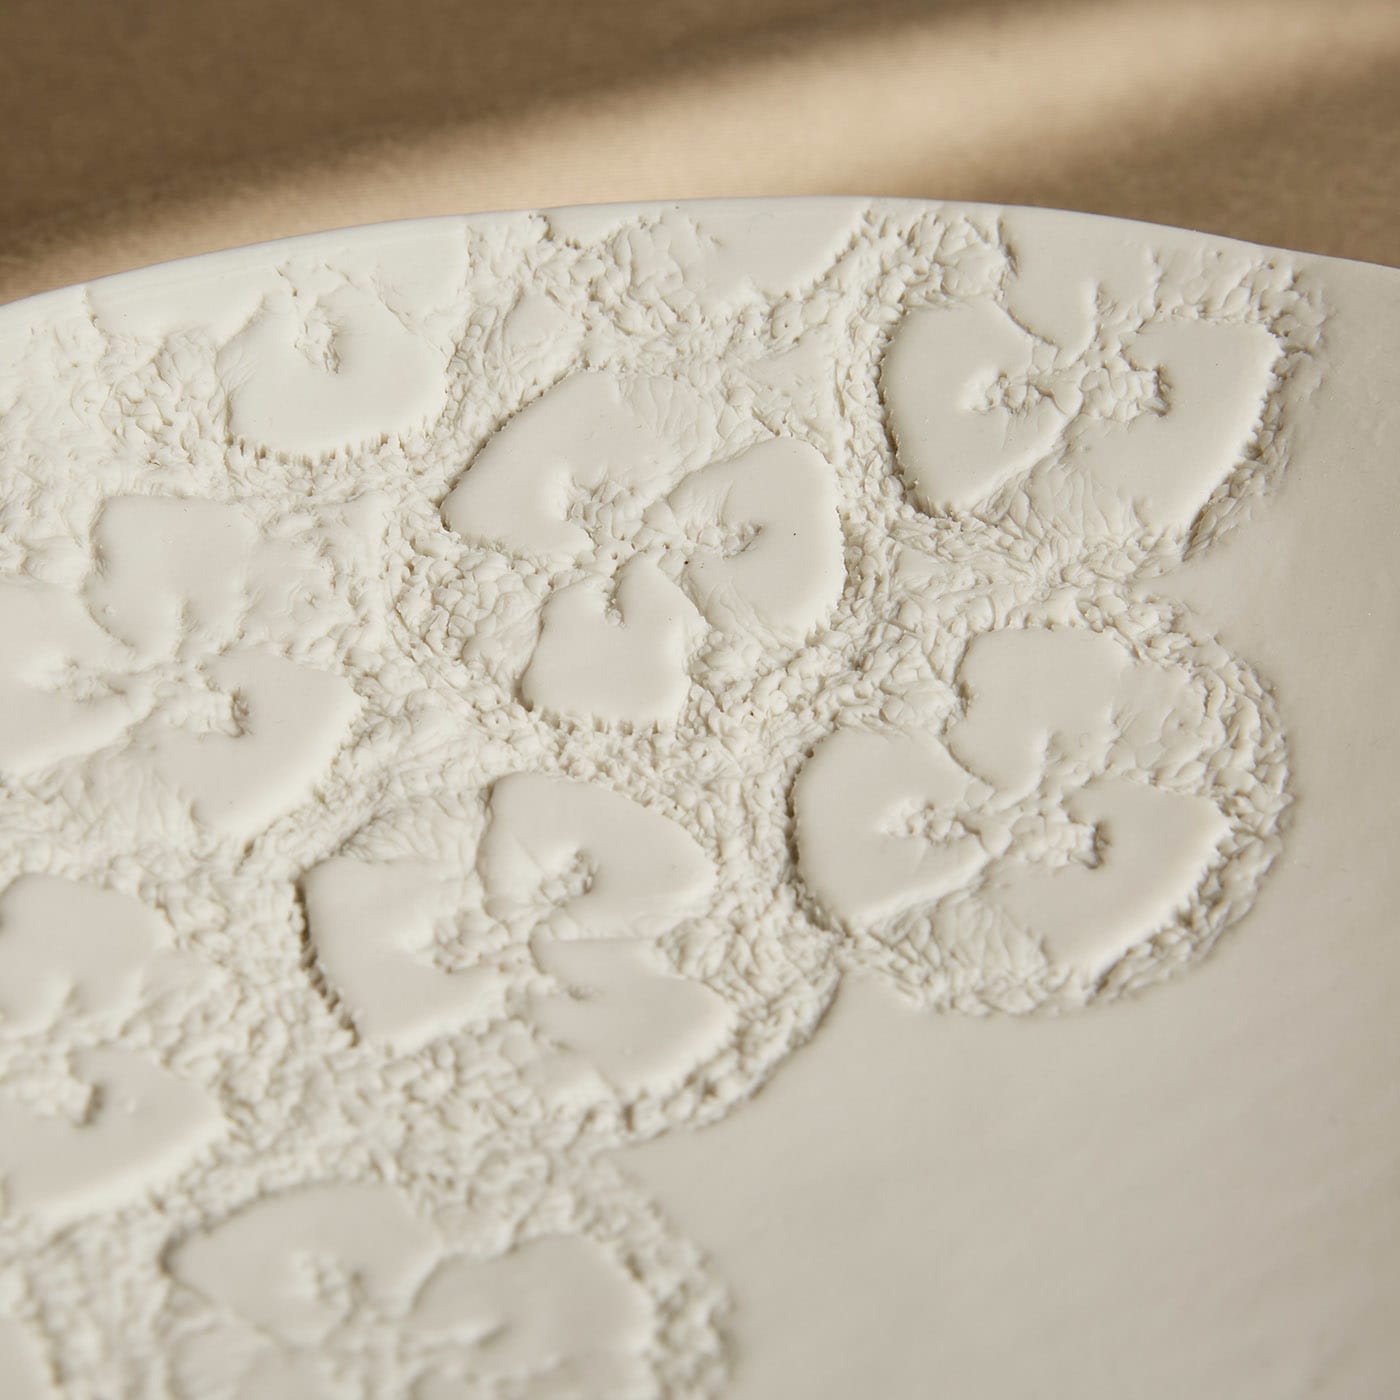 Contaminazioni Set of 2 Decorative Plates #2 - Federica Ramacciotti Atelier